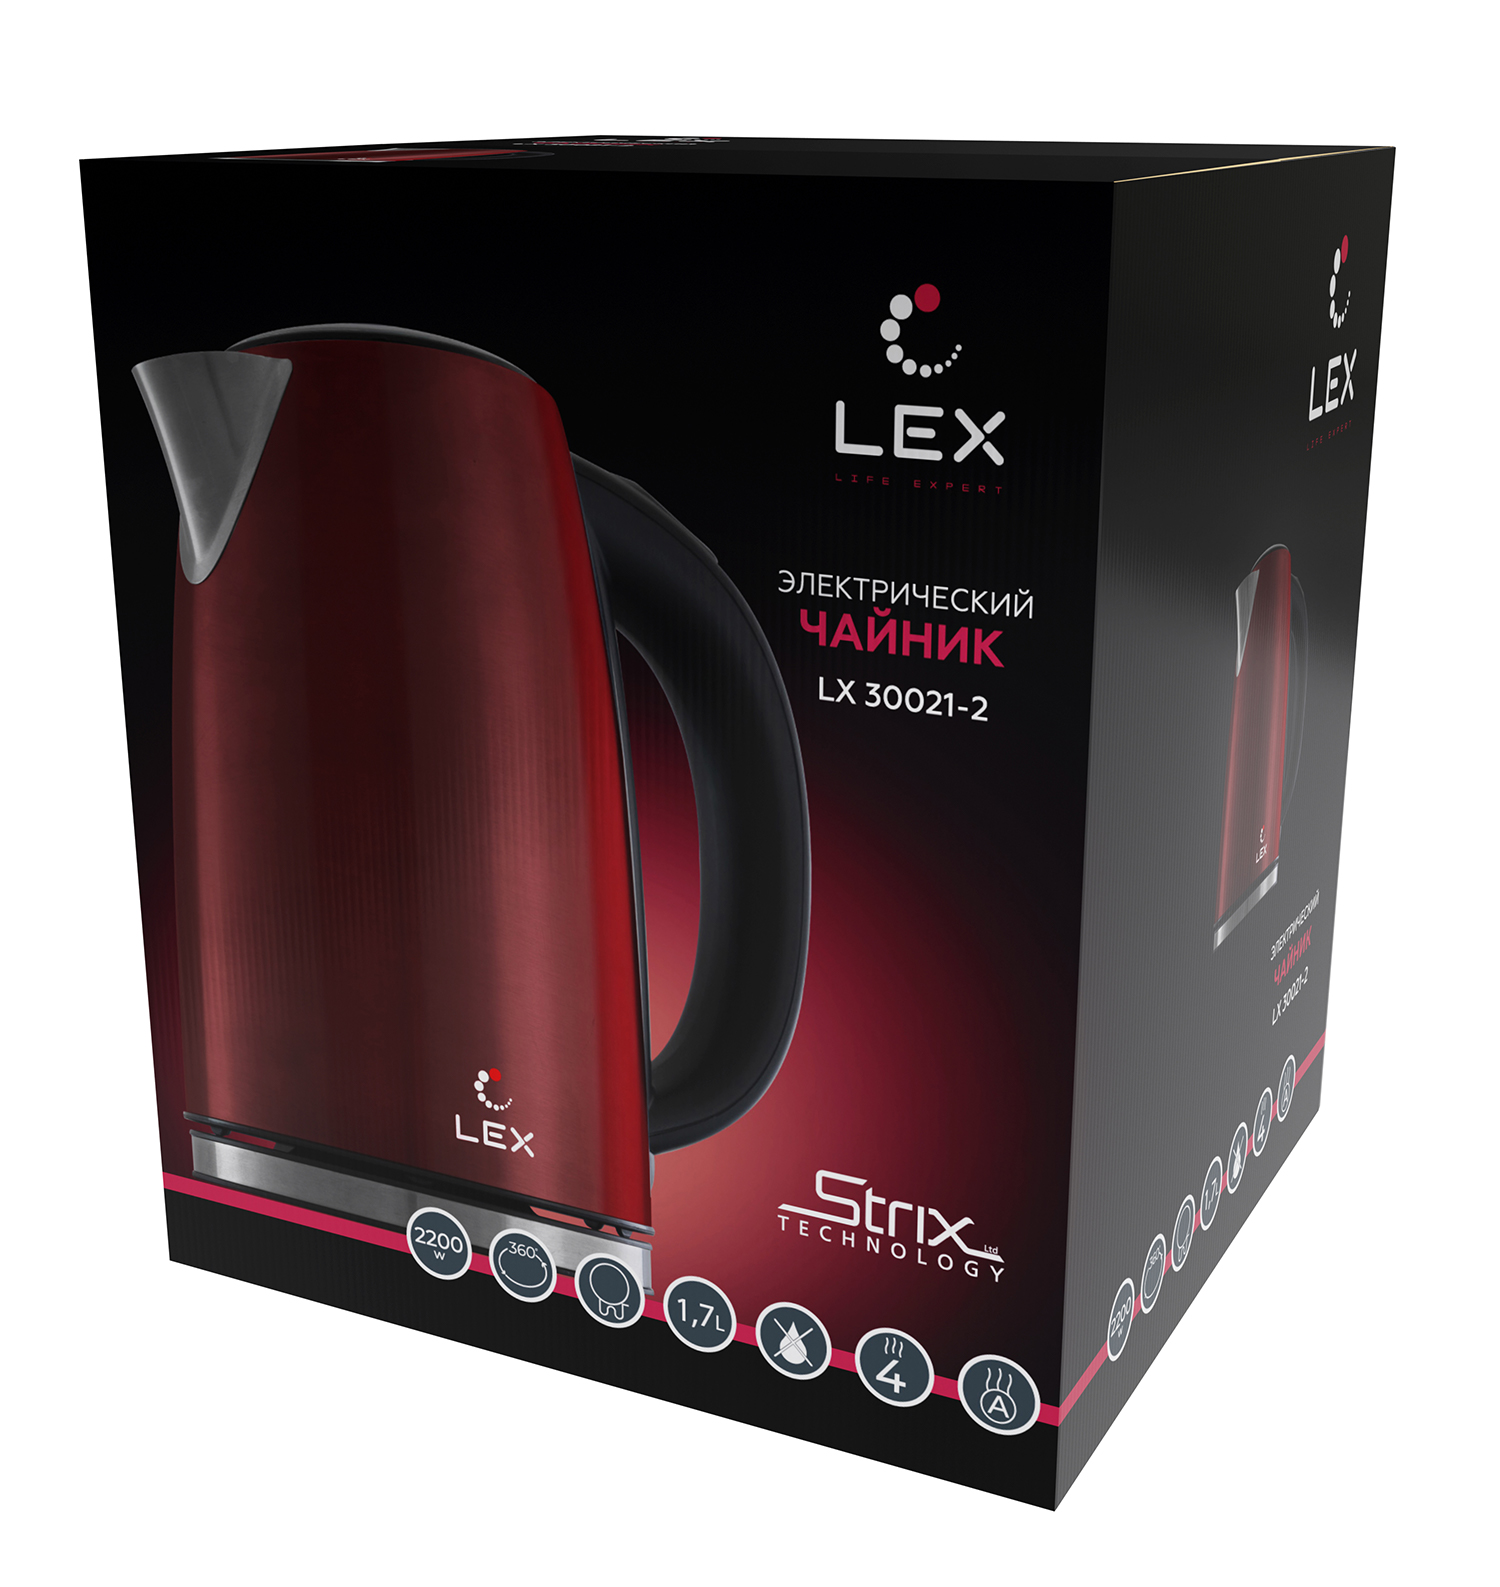 LEX LX 30021-2